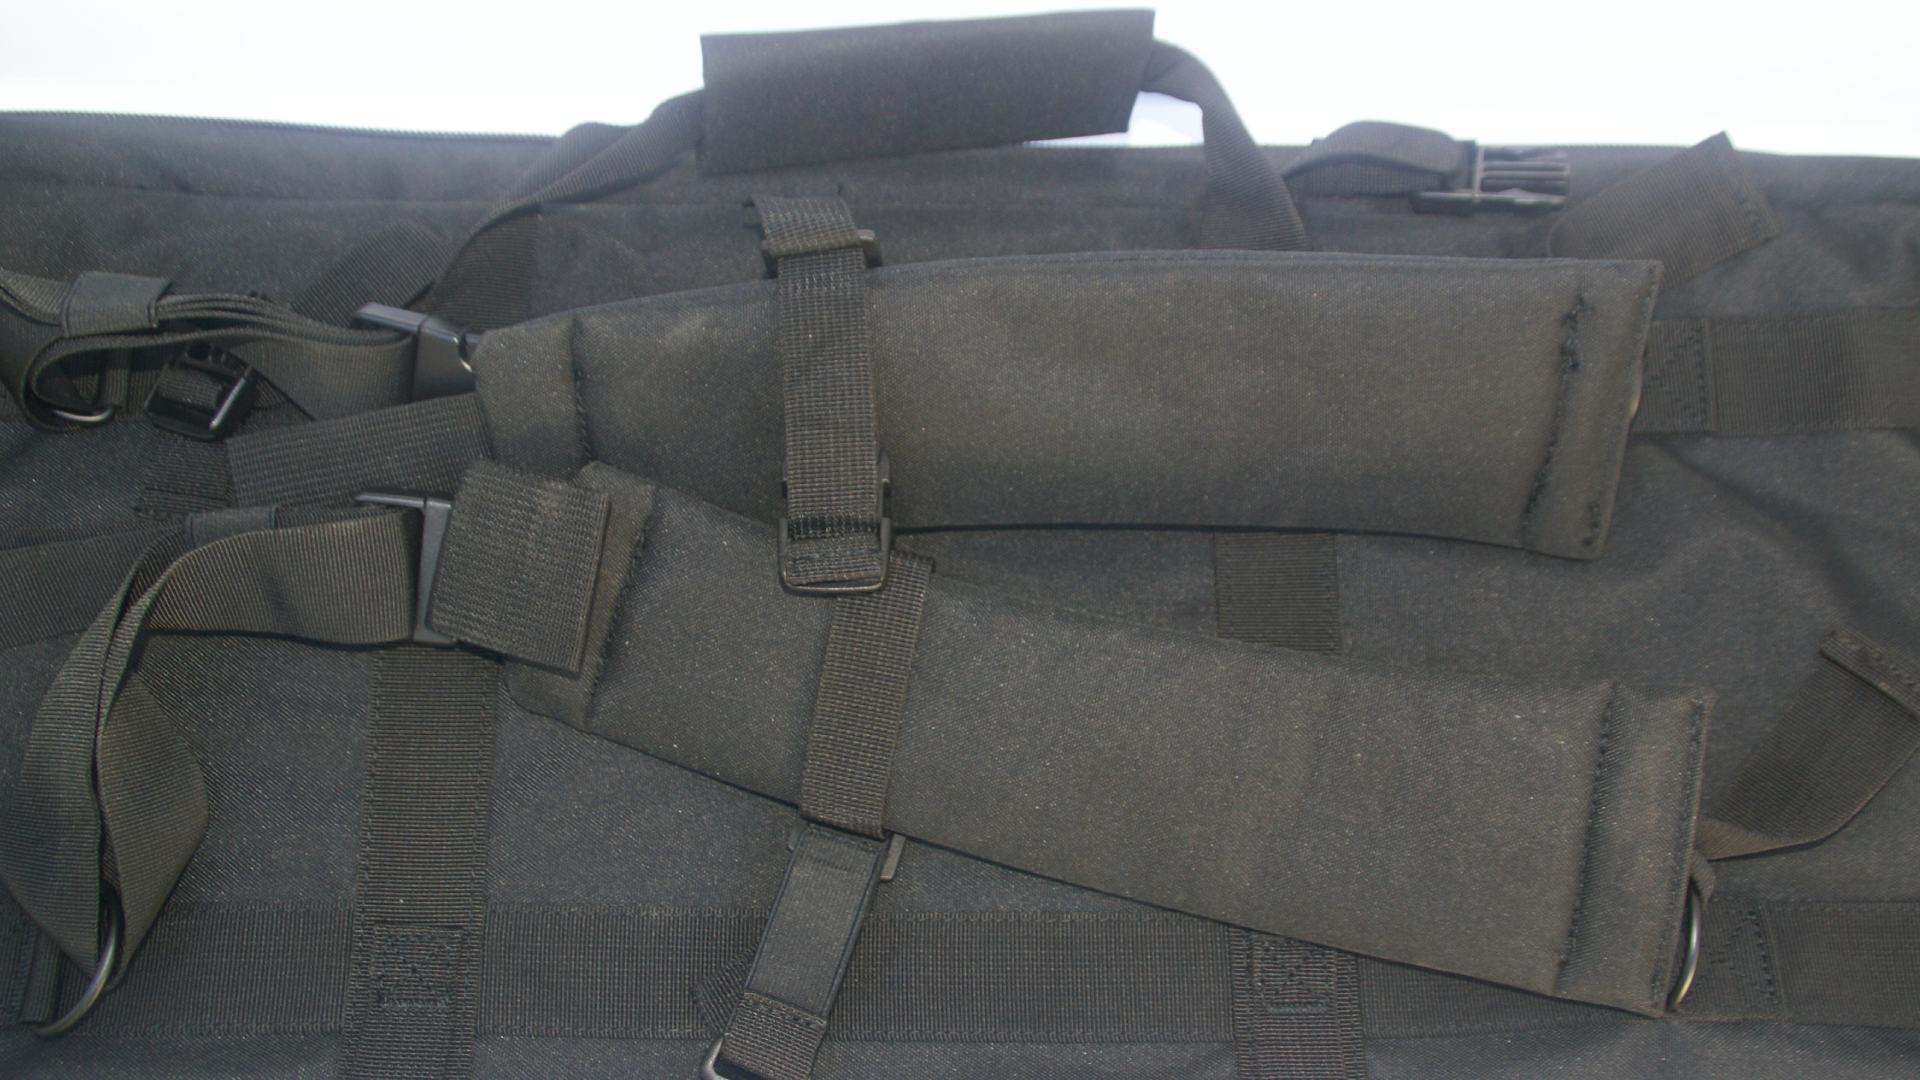 Soft rifle case straps